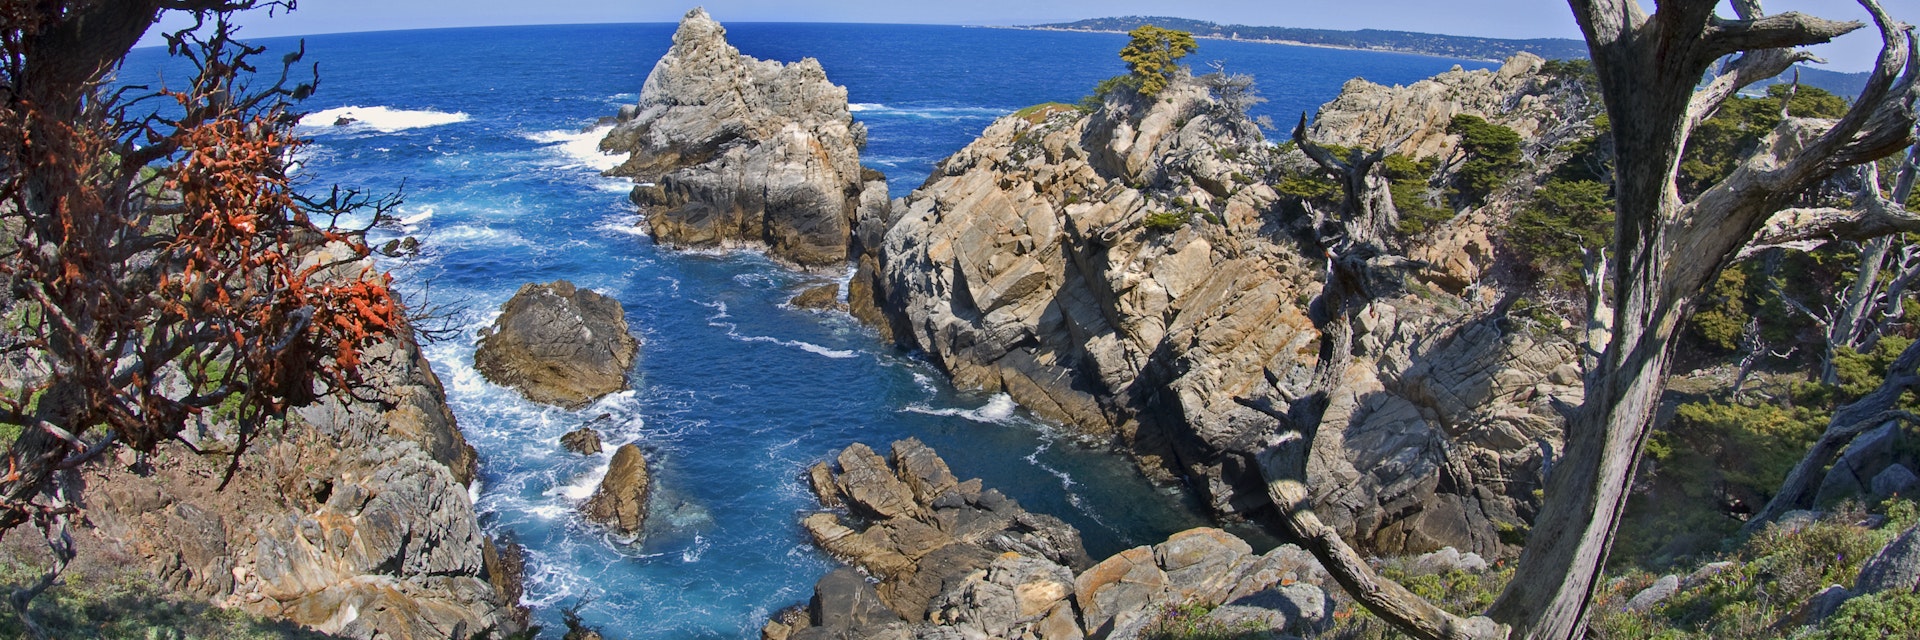 Point Lobos State Reserve near Carmel, CA